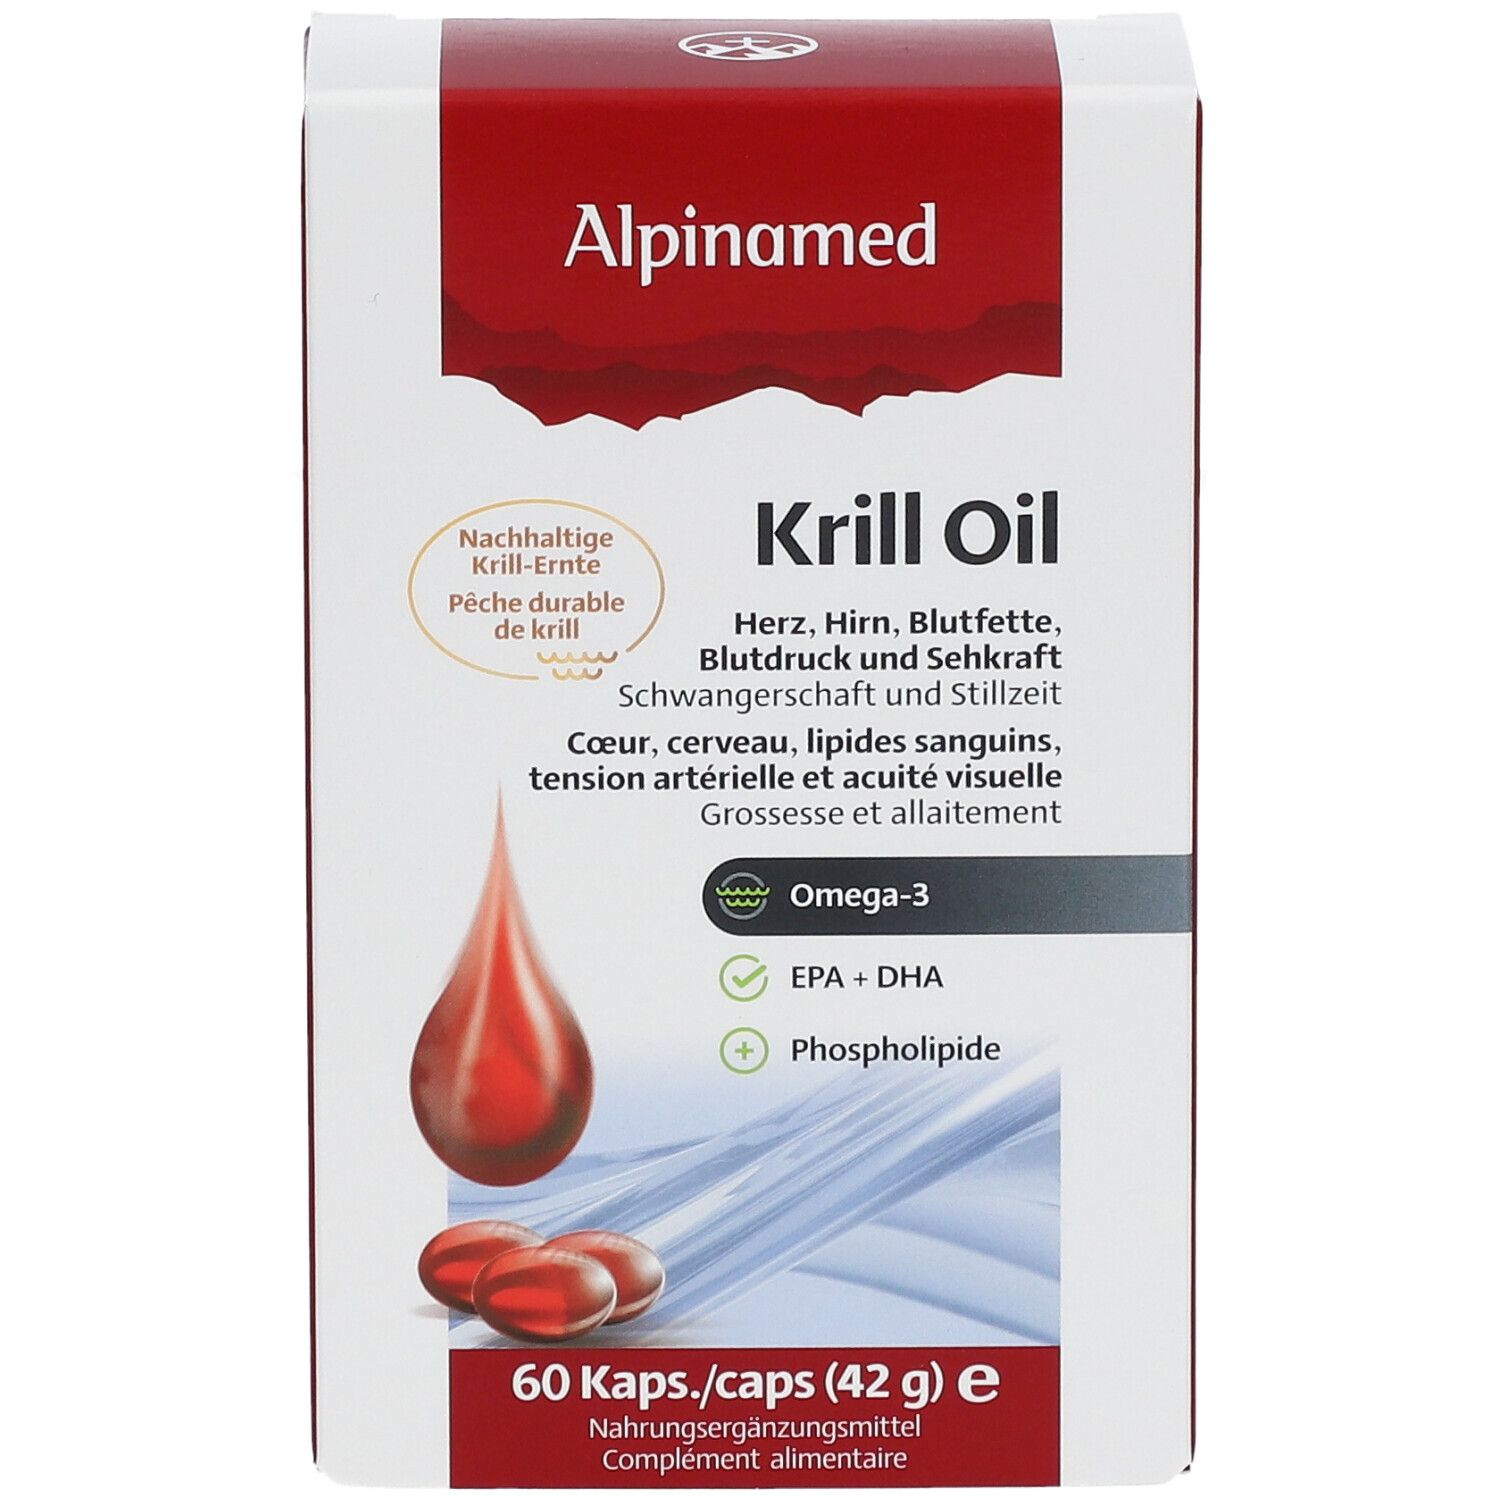 Alpinamed Krill Oil